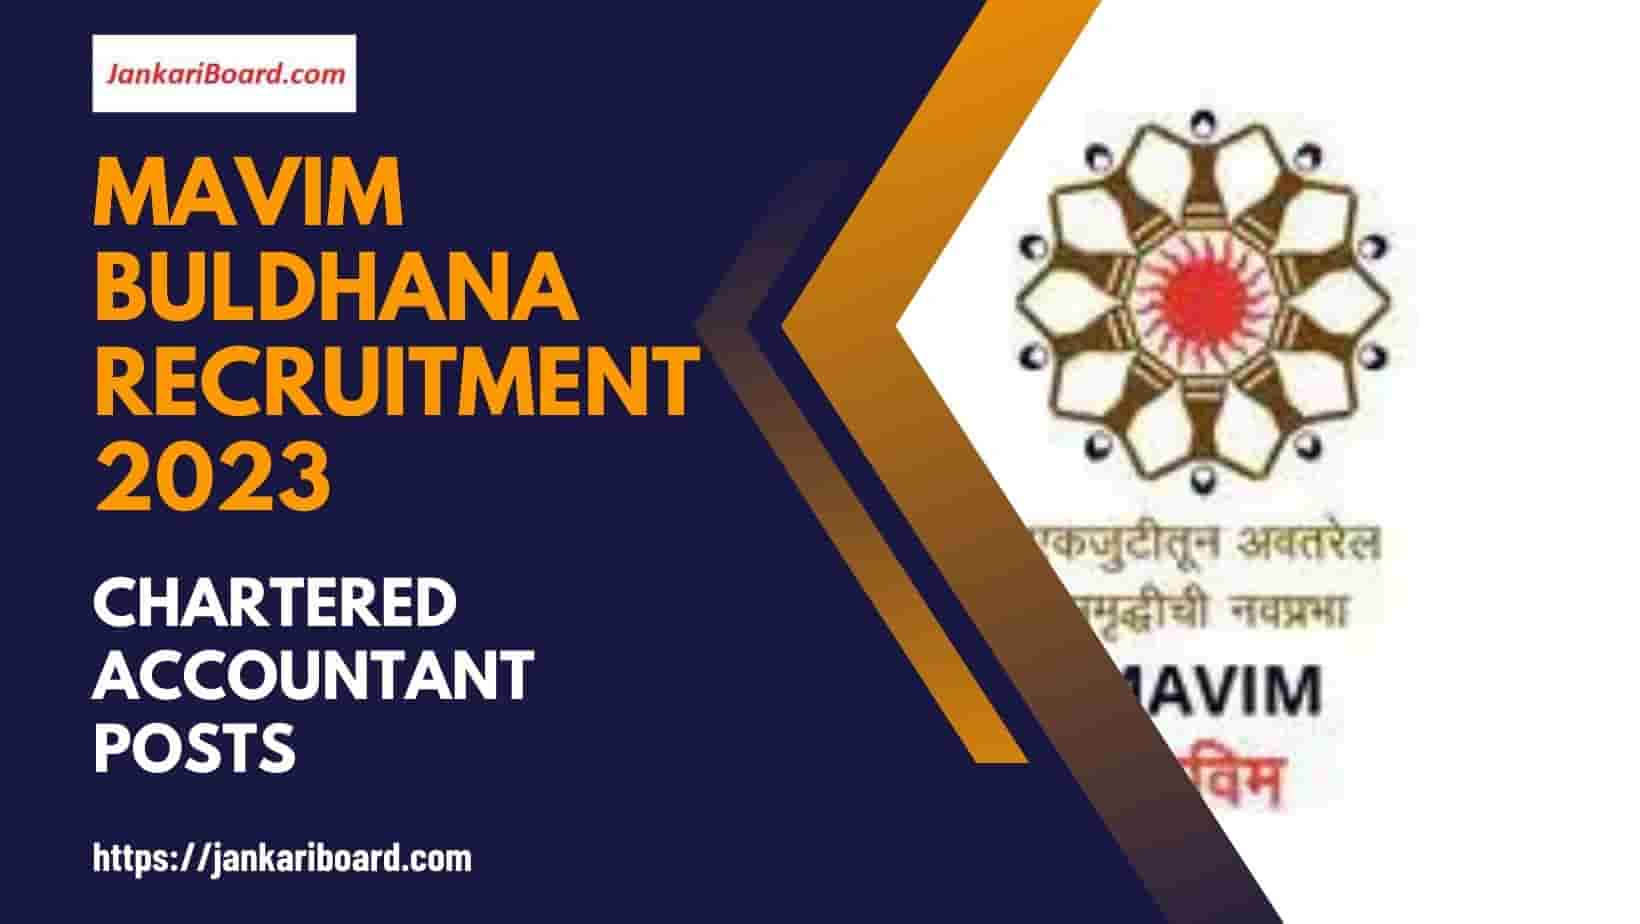 MAVIM Buldhana Recruitment 2023